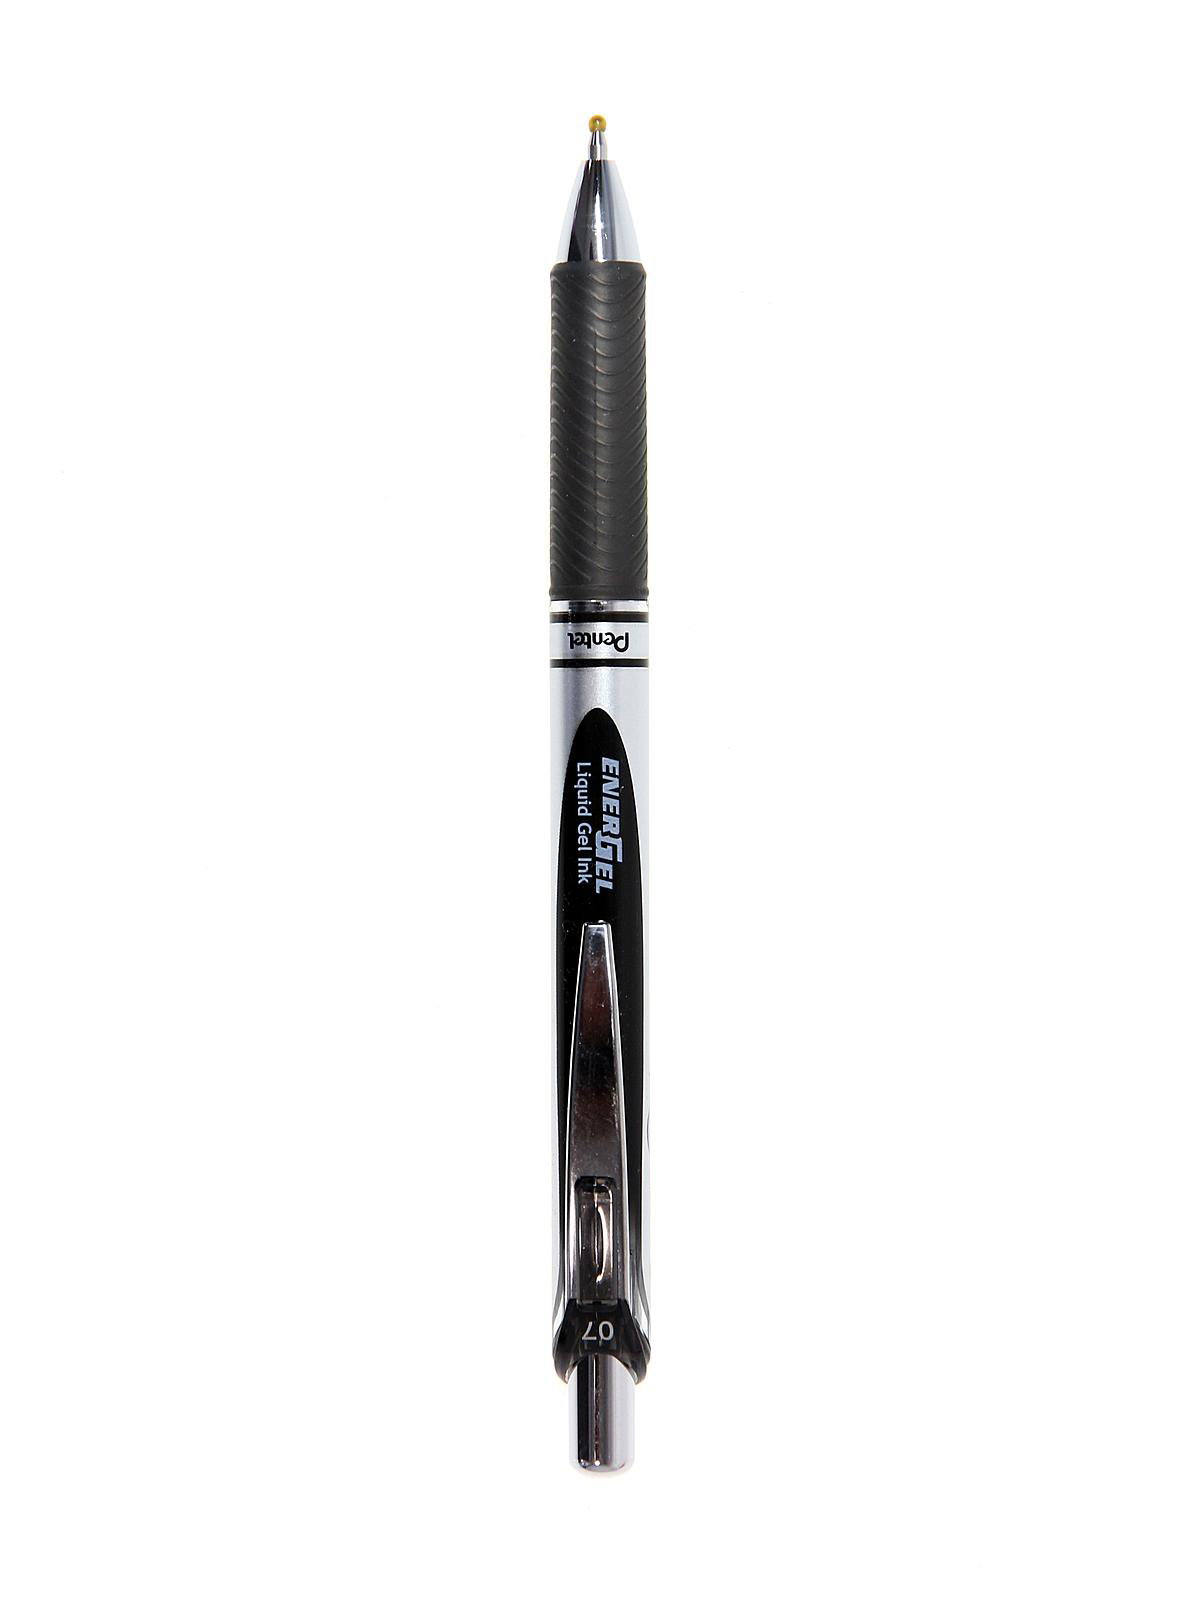 Pentel EnerGel RTX Gel Pens Black